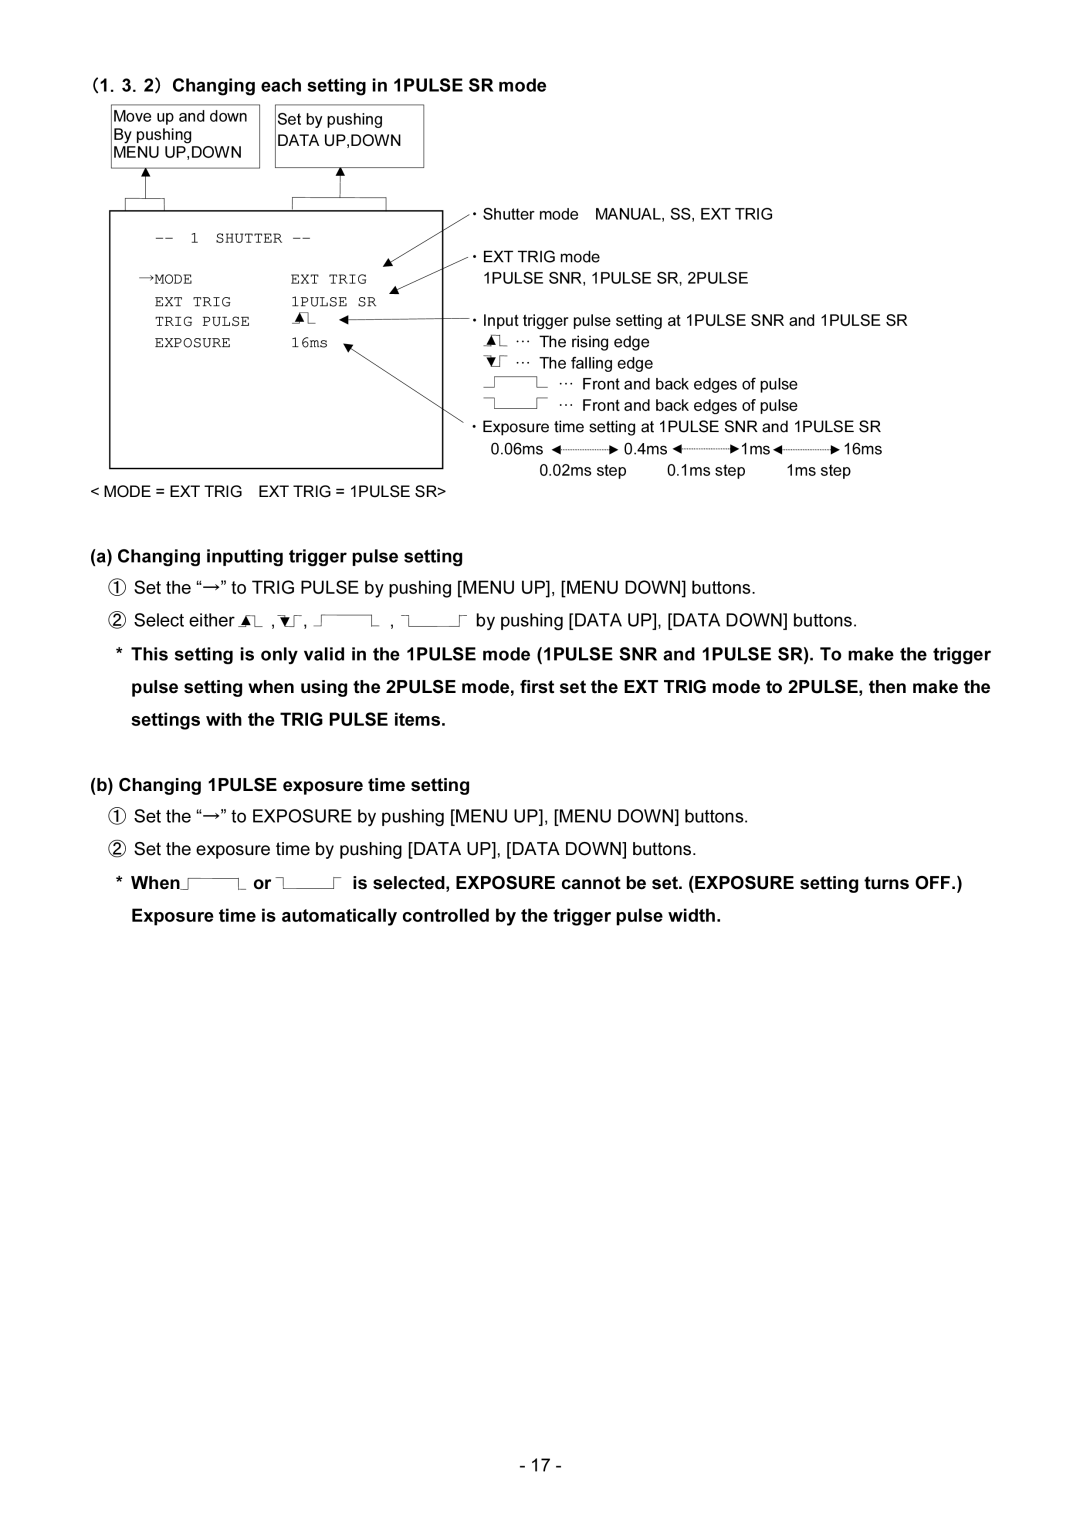 Toshiba IK-TF2 instruction manual Mode EXT Trig, Trig Pulse Exposure 